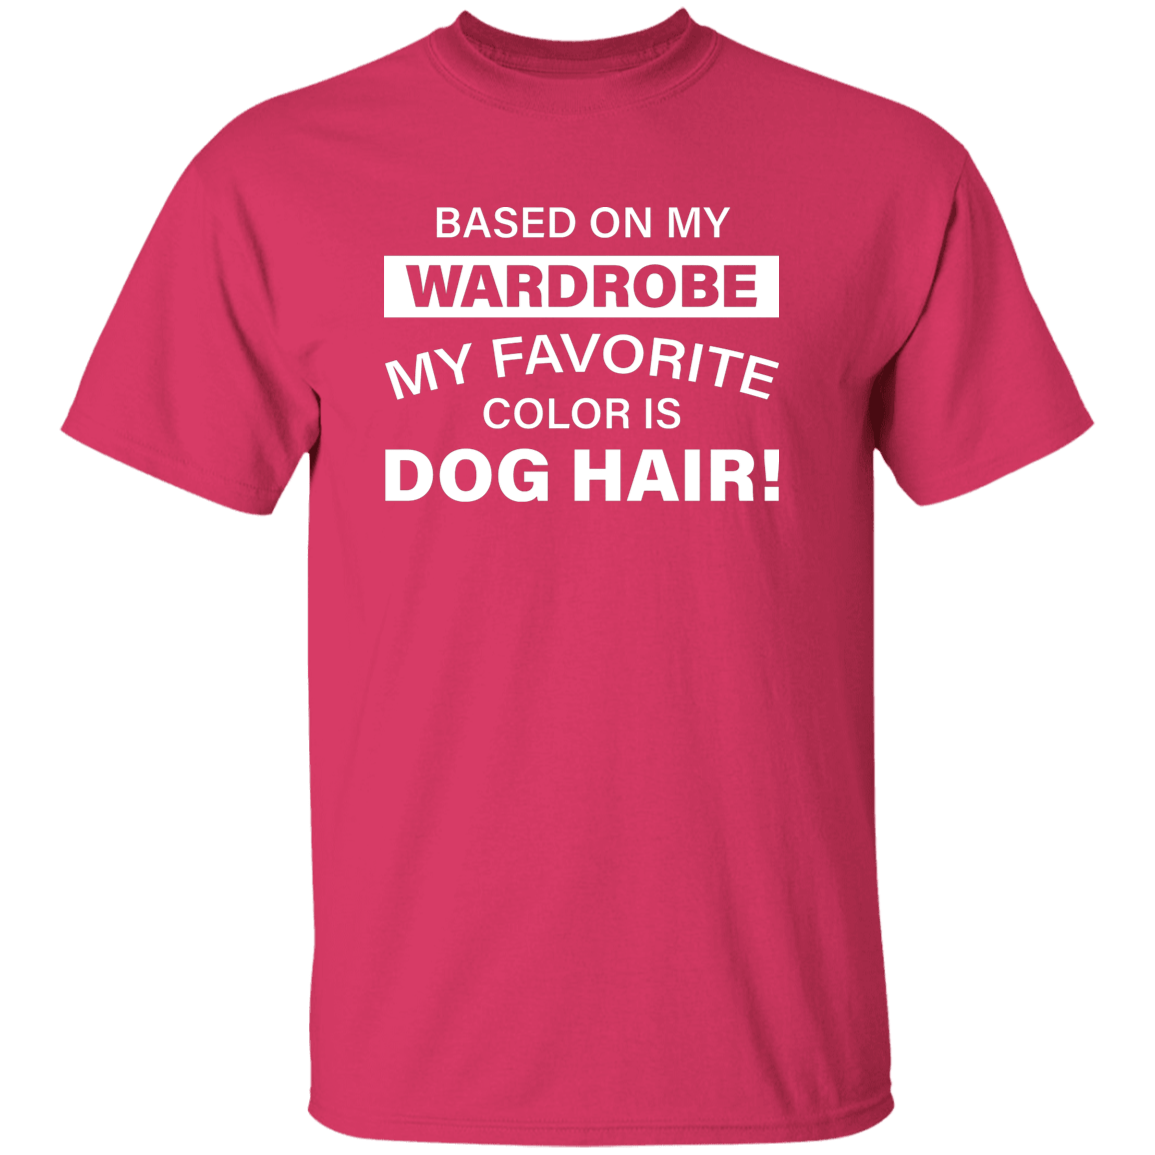 Favorite Color Dog Hair - T Shirt.